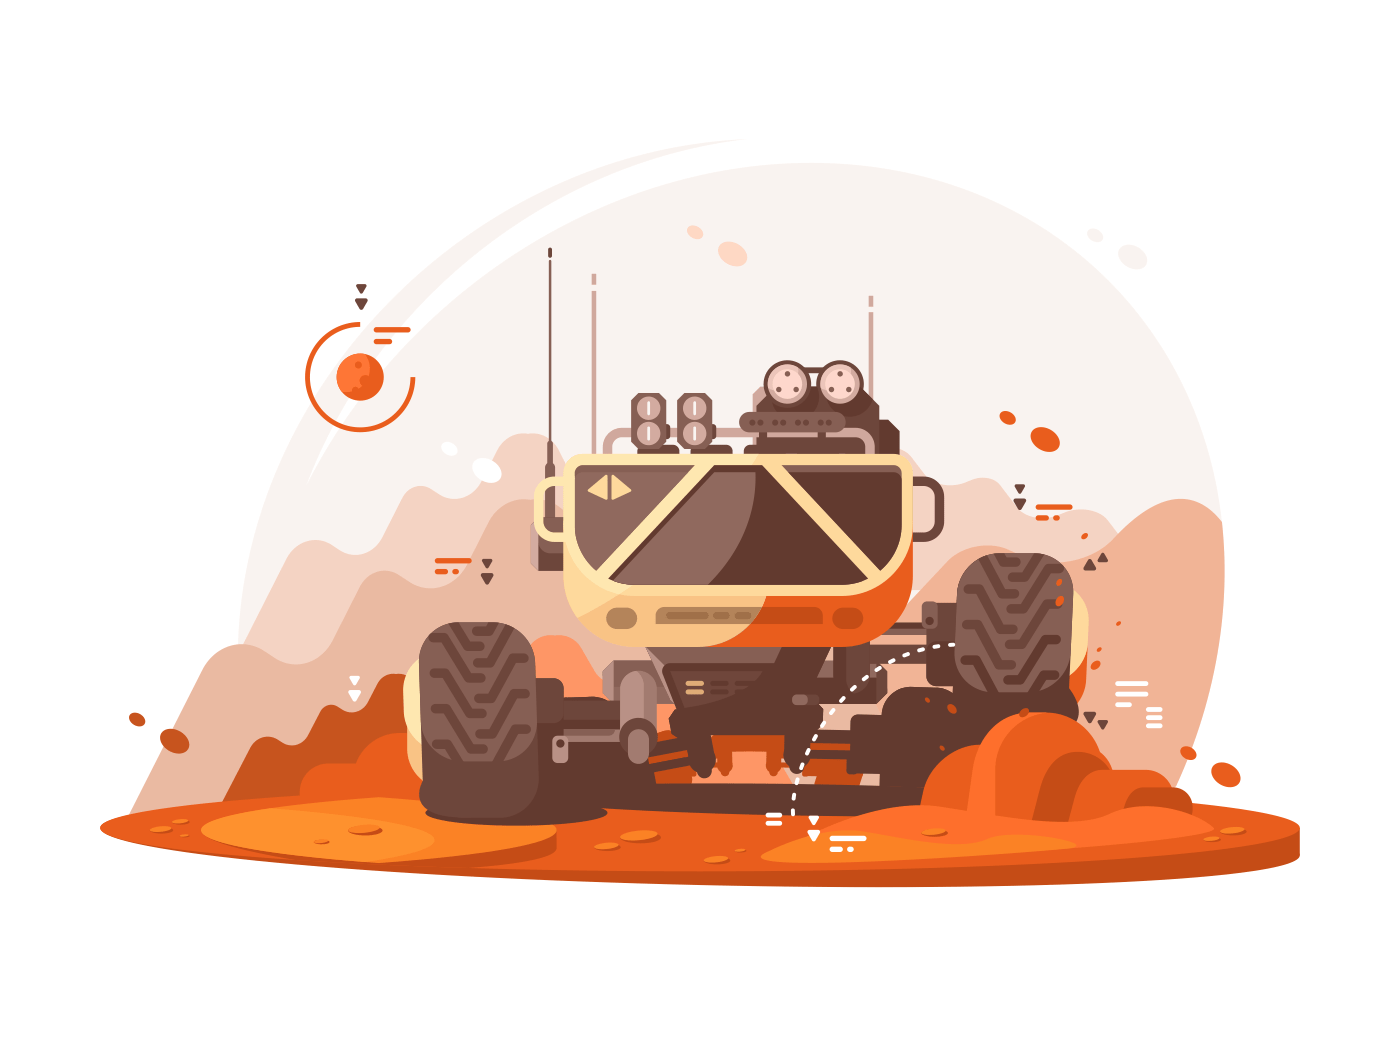 Mars rover for scientific research illustration